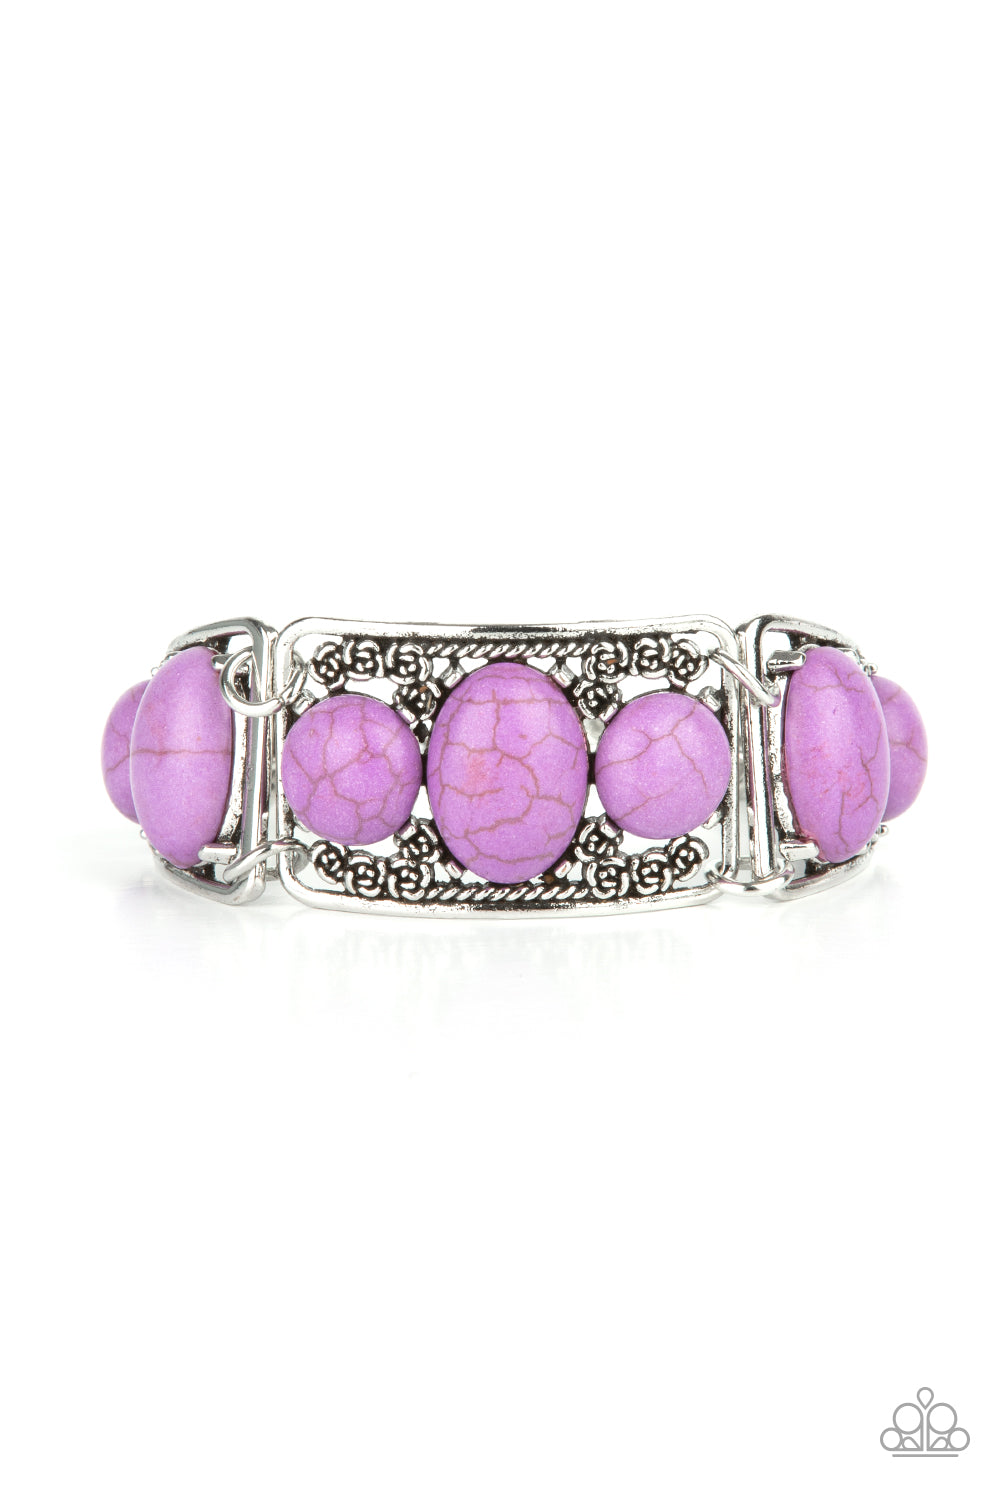 five-dollar-jewelry-southern-splendor-purple-bracelet-paparazzi-accessories